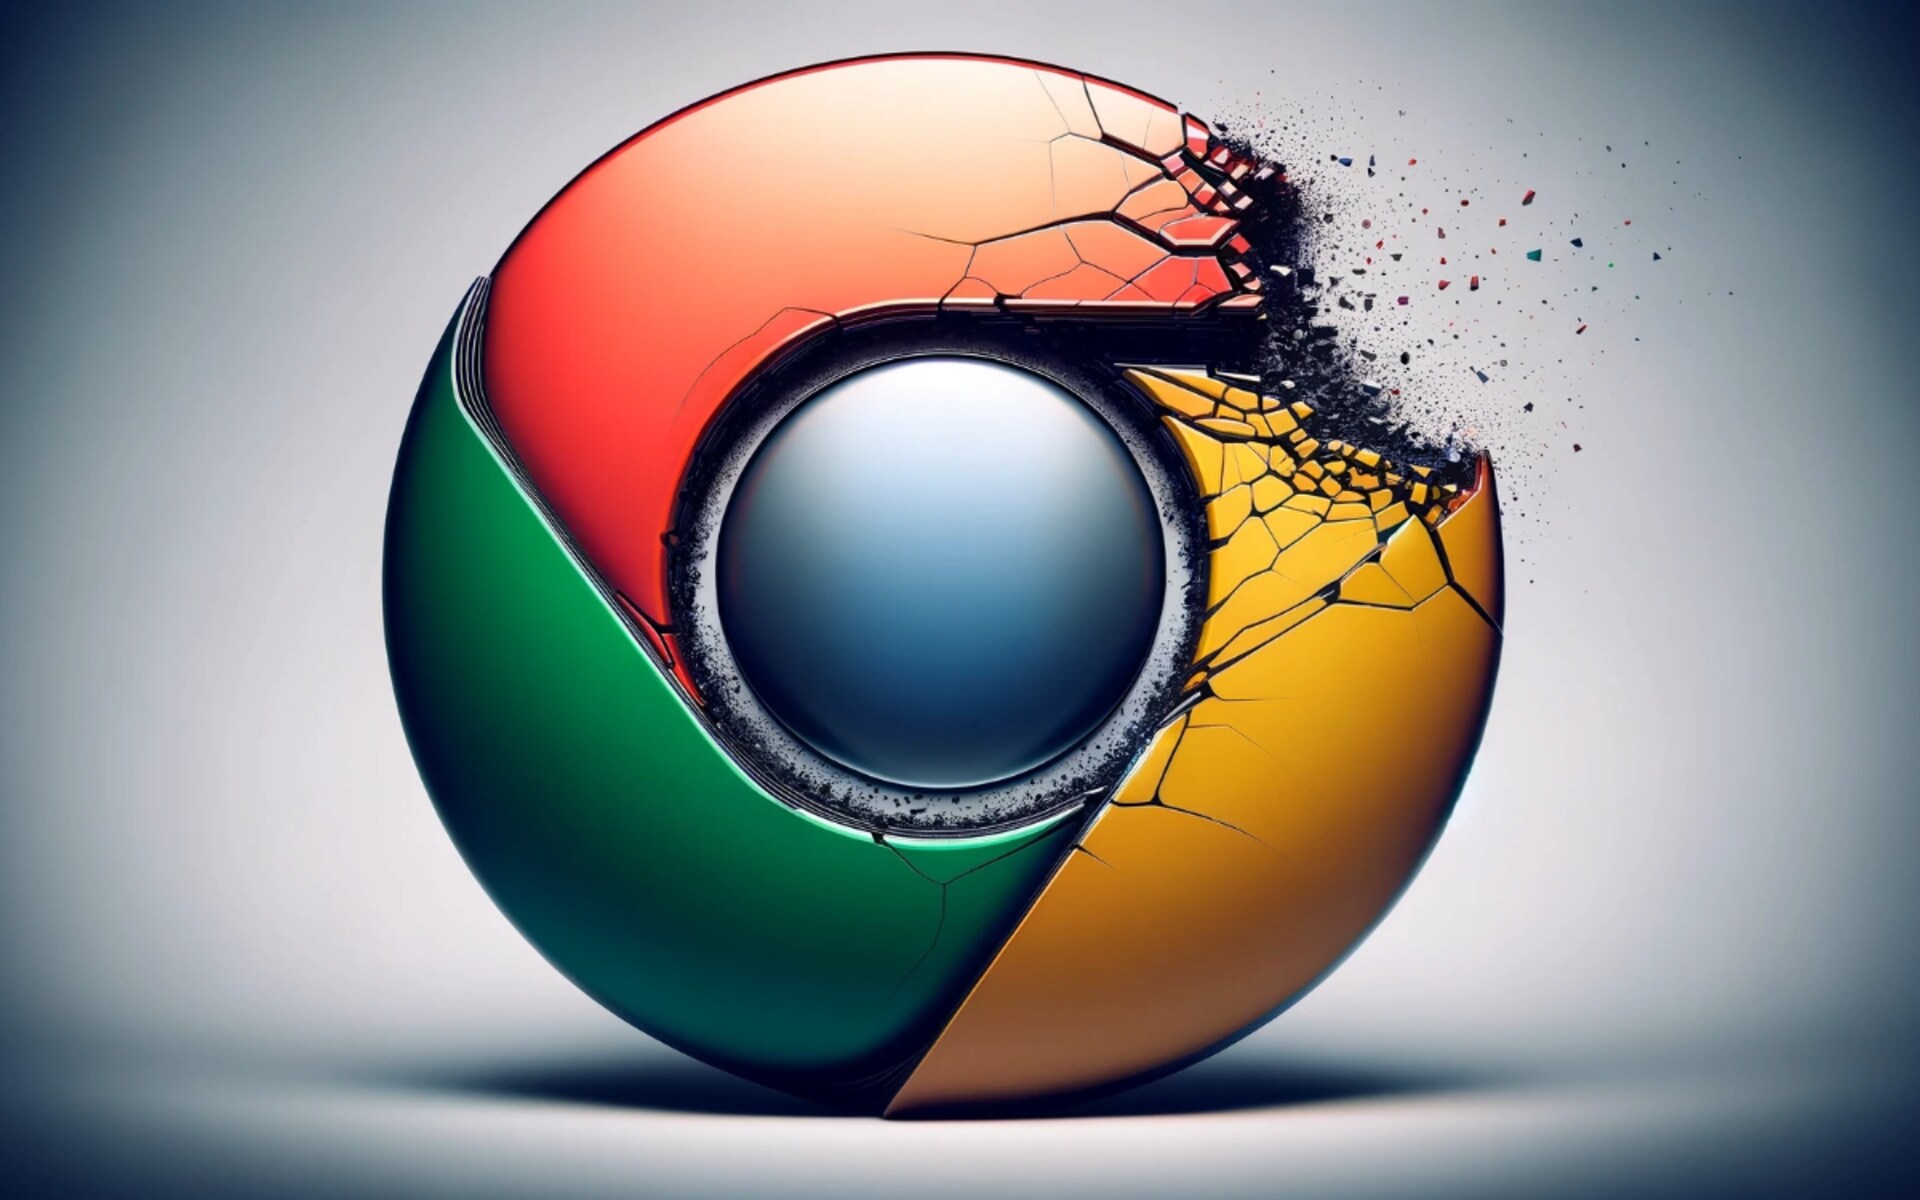 Why Wont Chrome Update